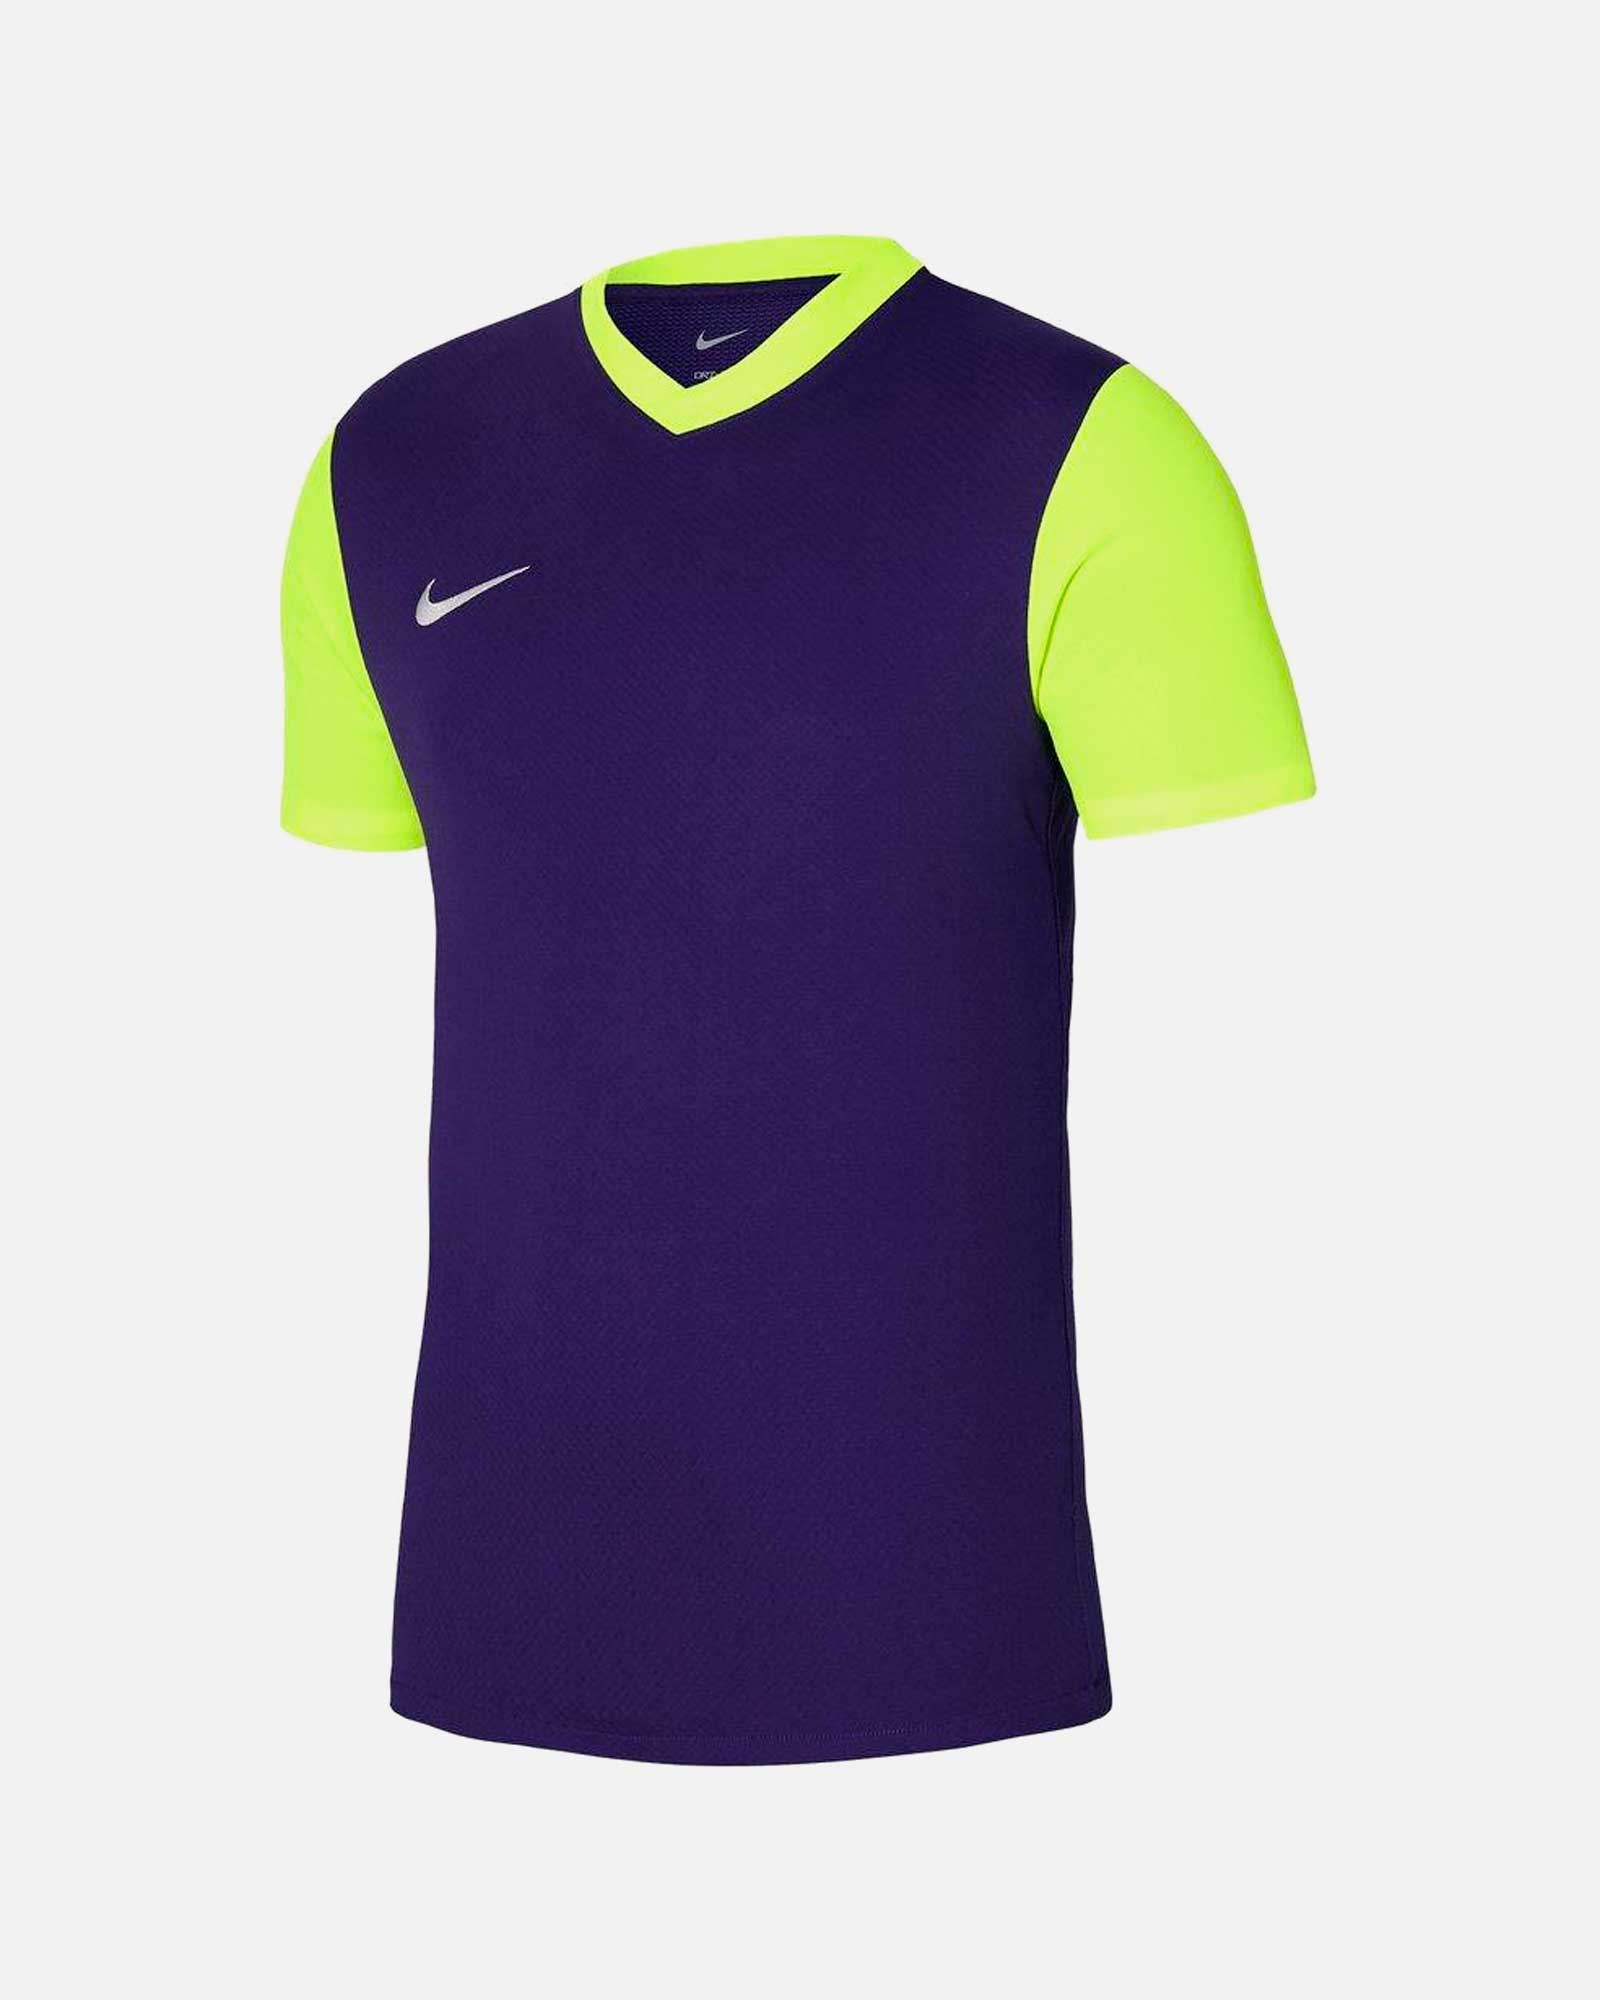 Camiseta Nike Tiempo Premier II - Fútbol Factory